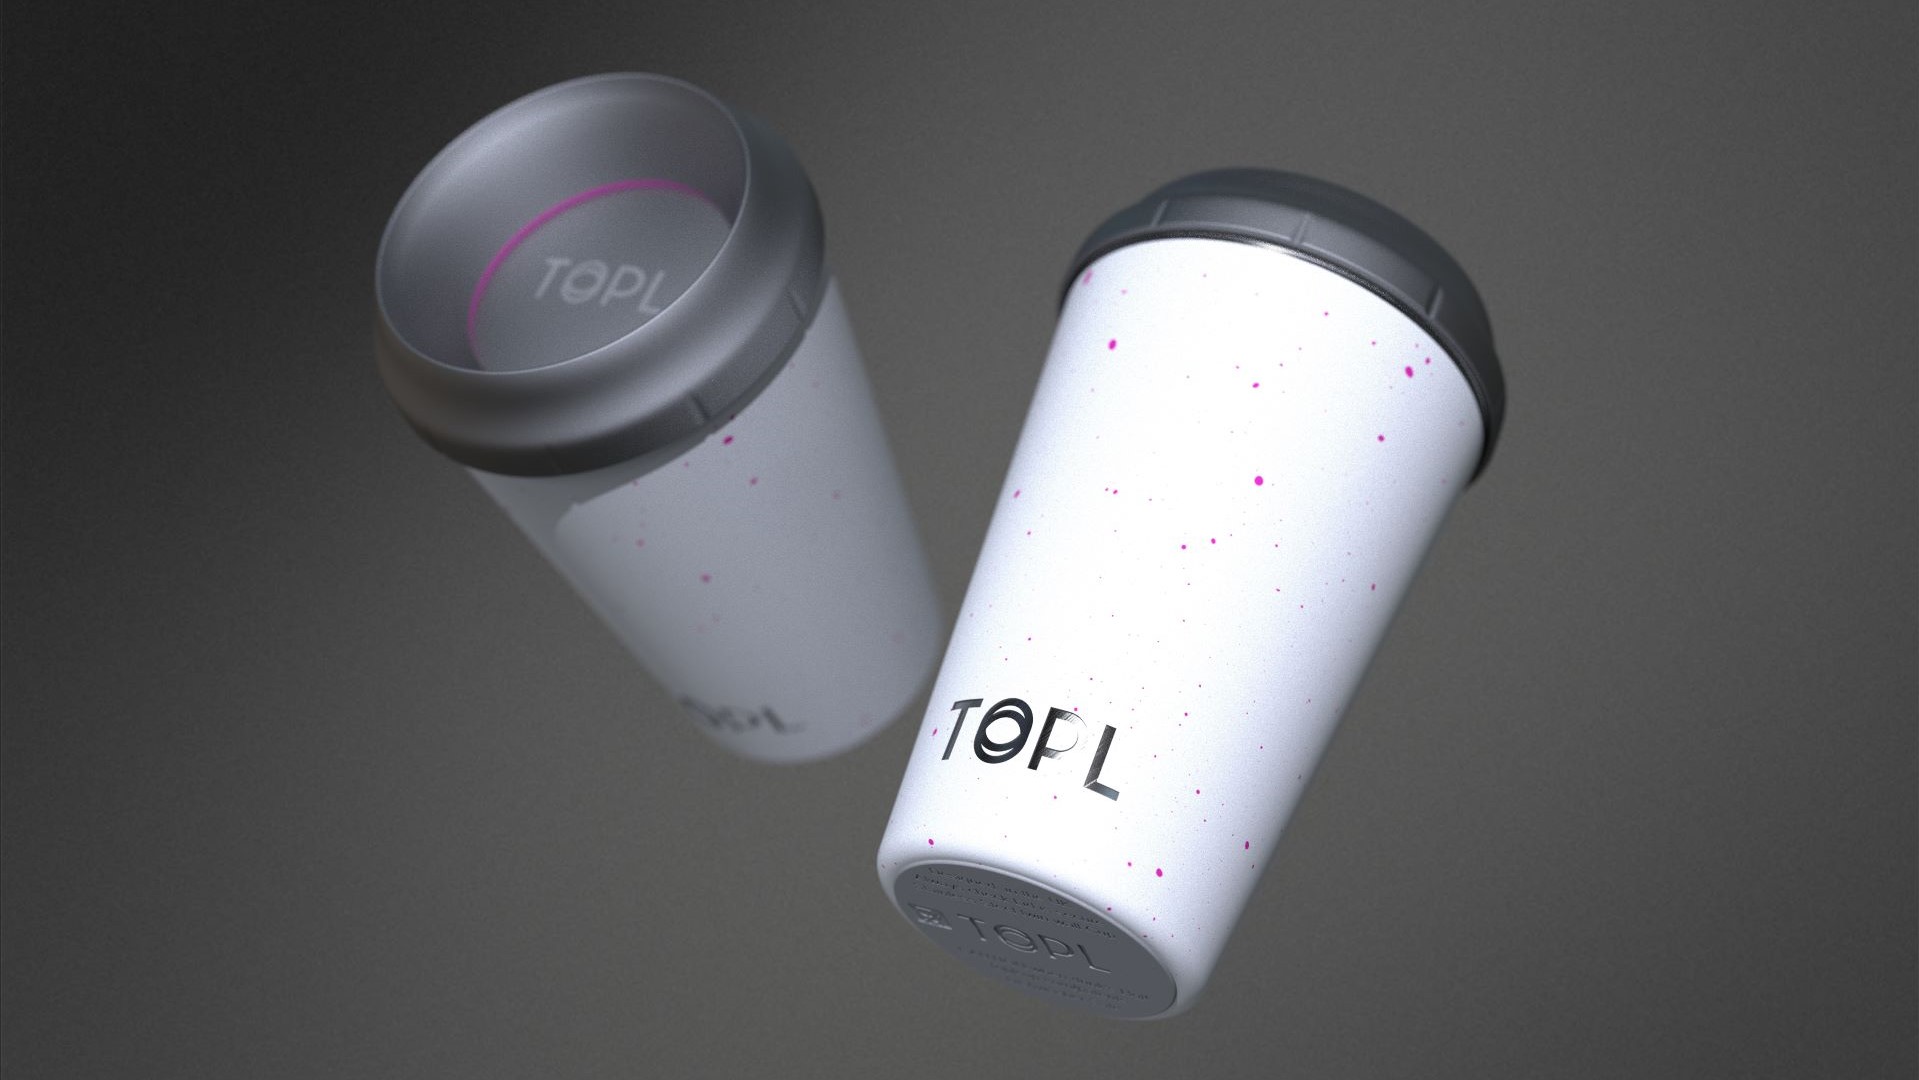 http://designwanted.com/wp-content/uploads/2022/02/TOPL-reusable-cup.jpg